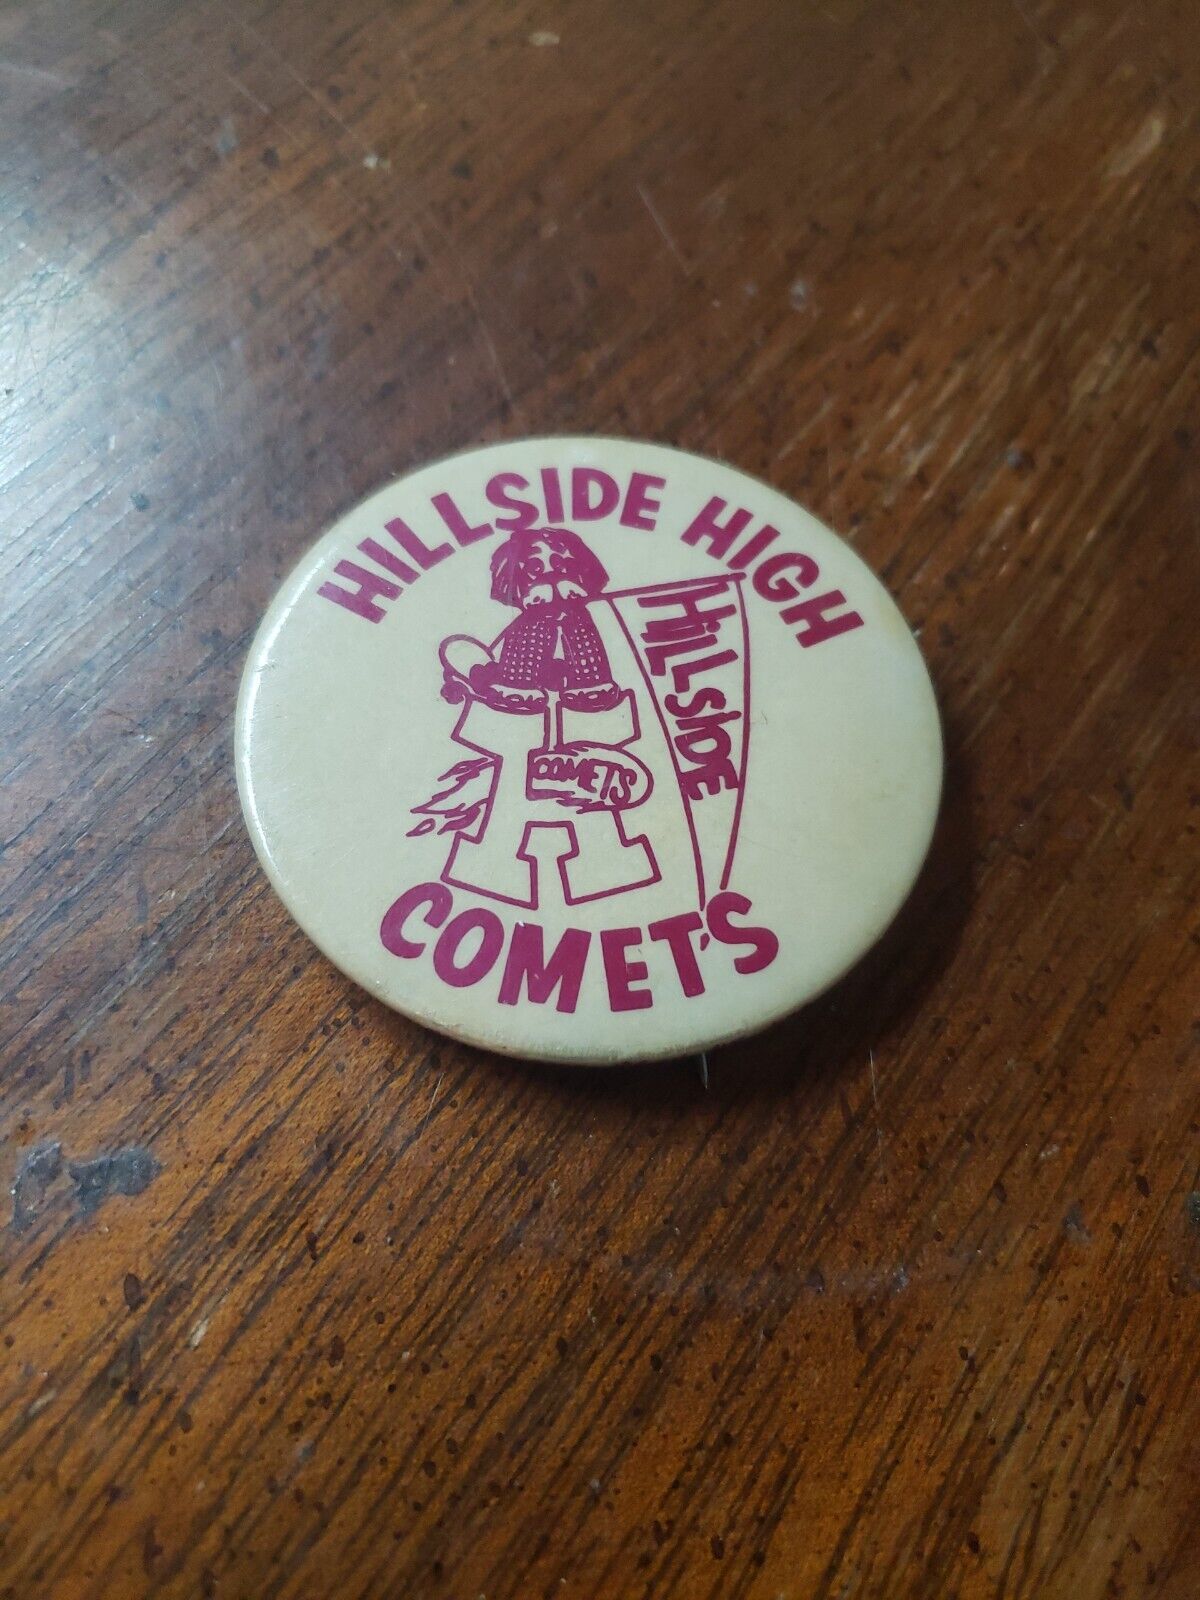 Vintage Hillside High Comets Pinback Button Hillside New Jersey 2